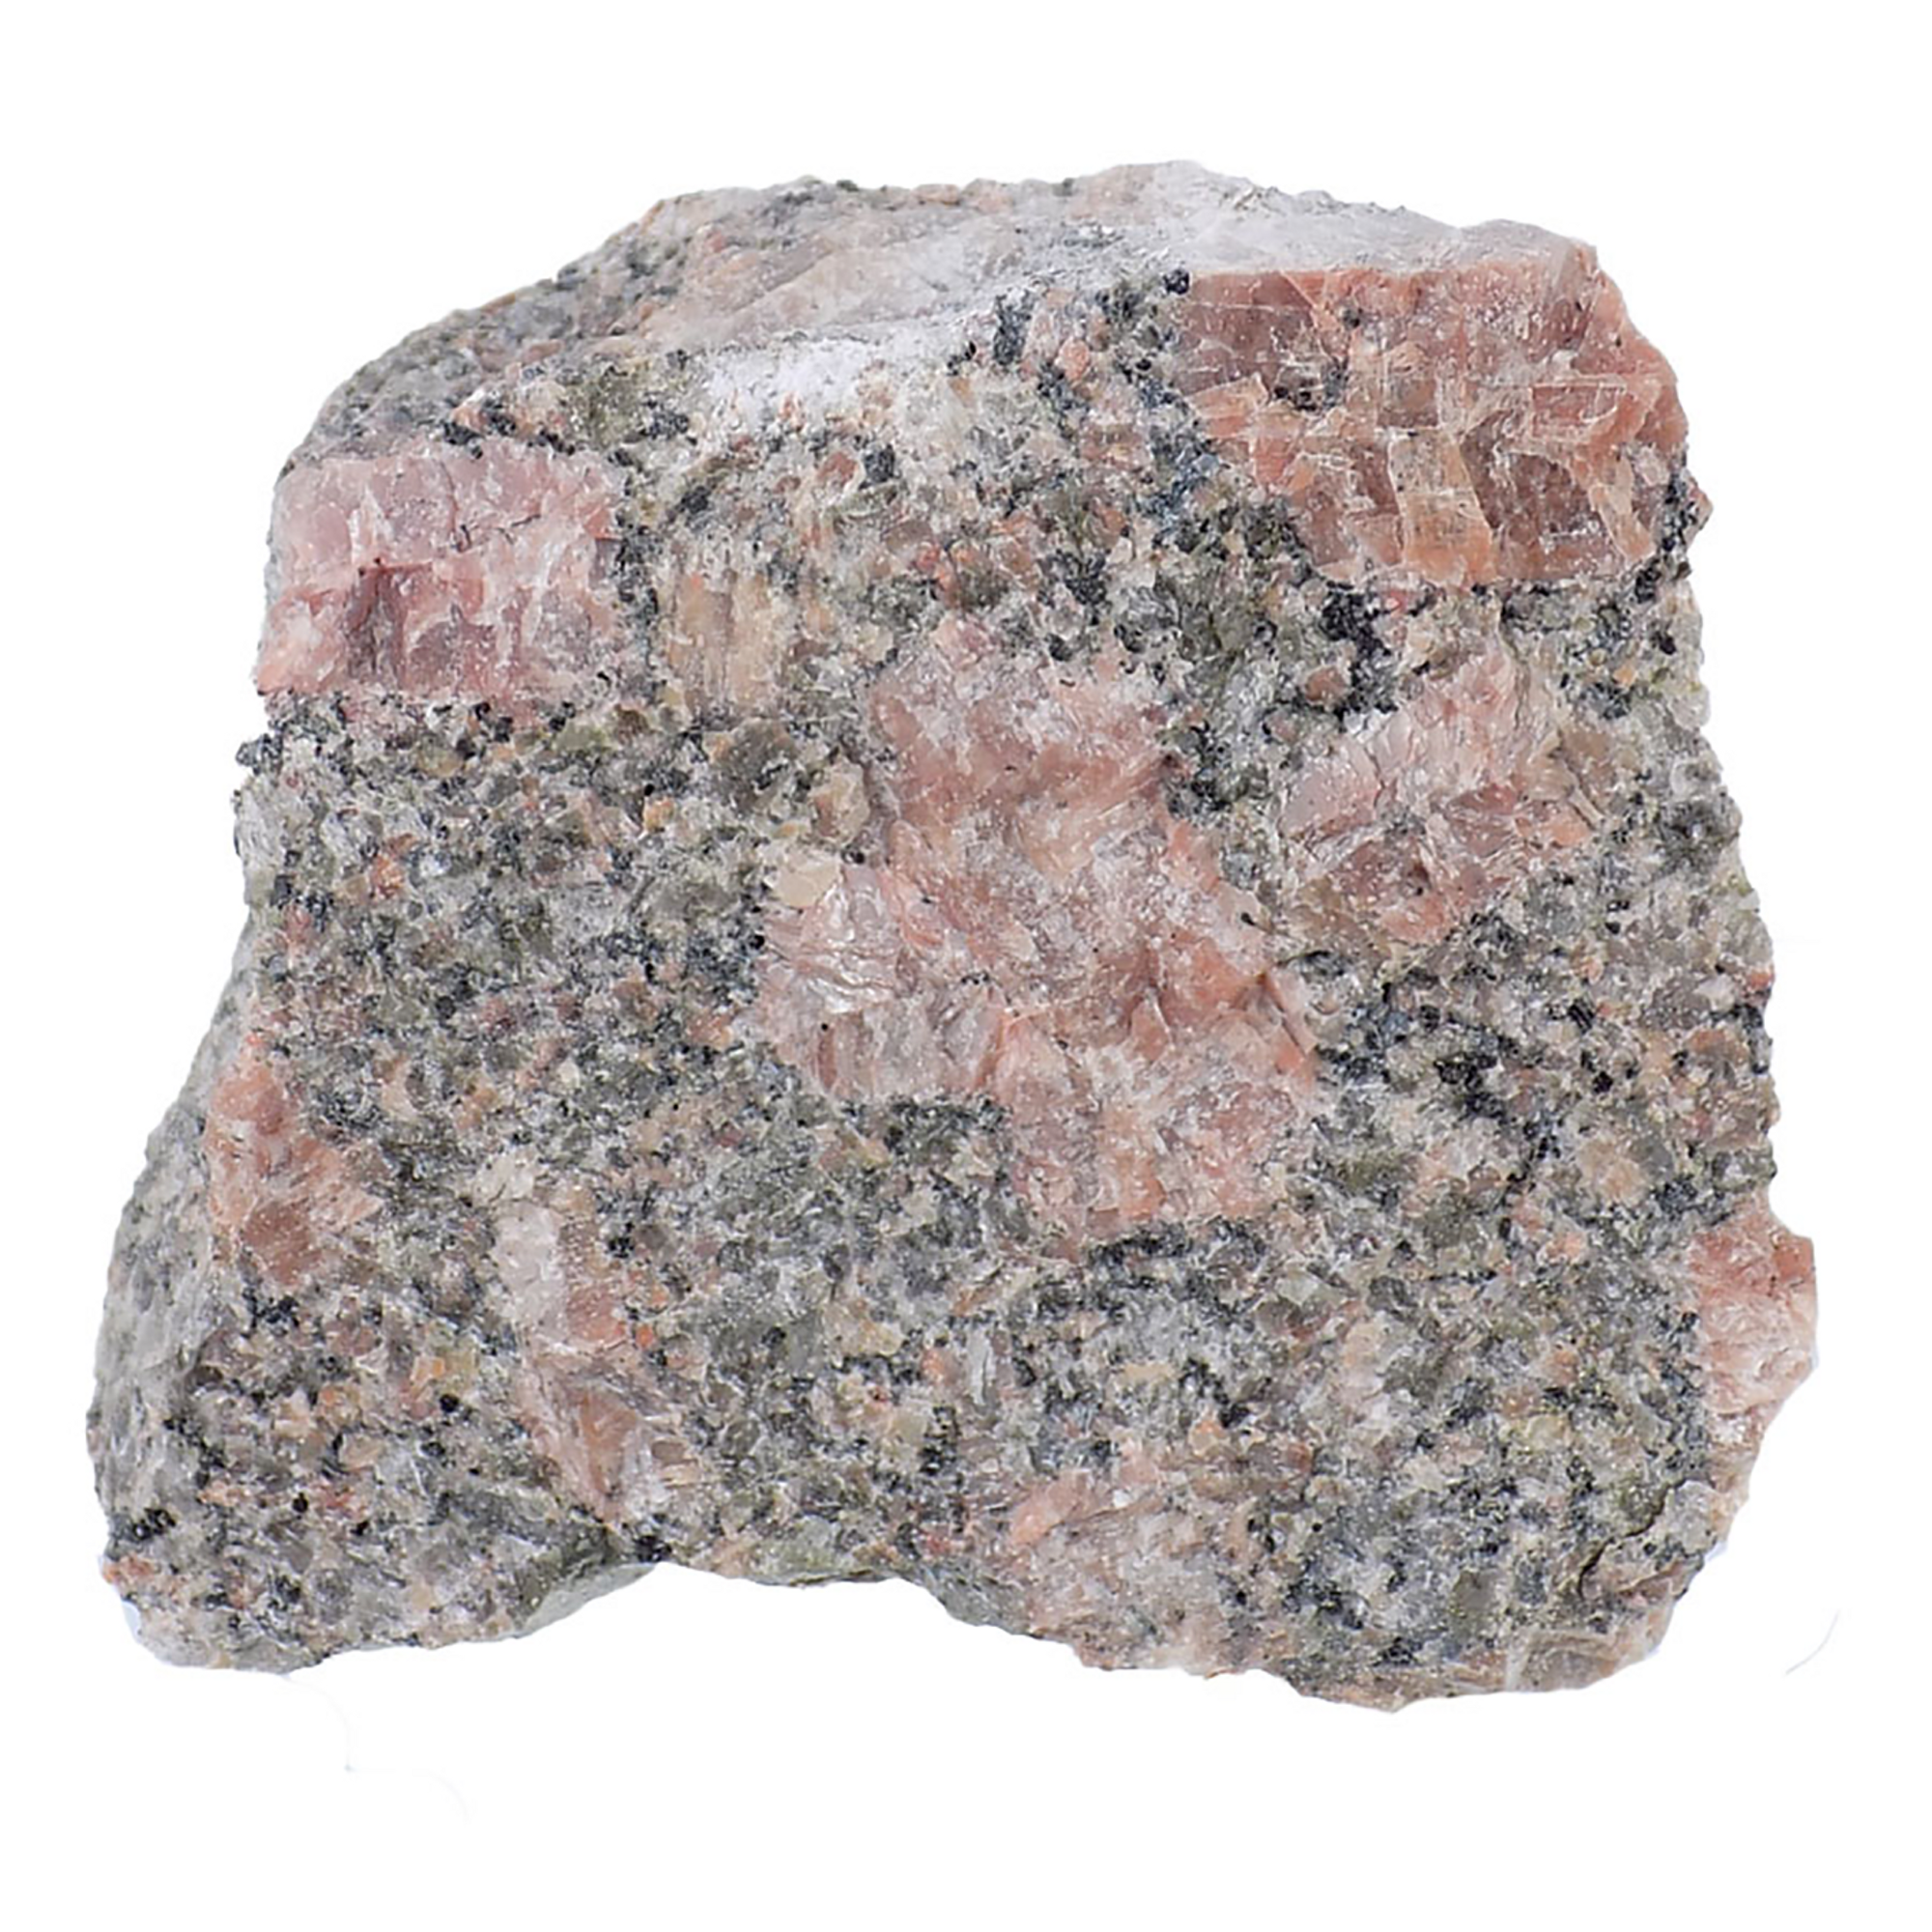 Rock Specimen Granite (shap)